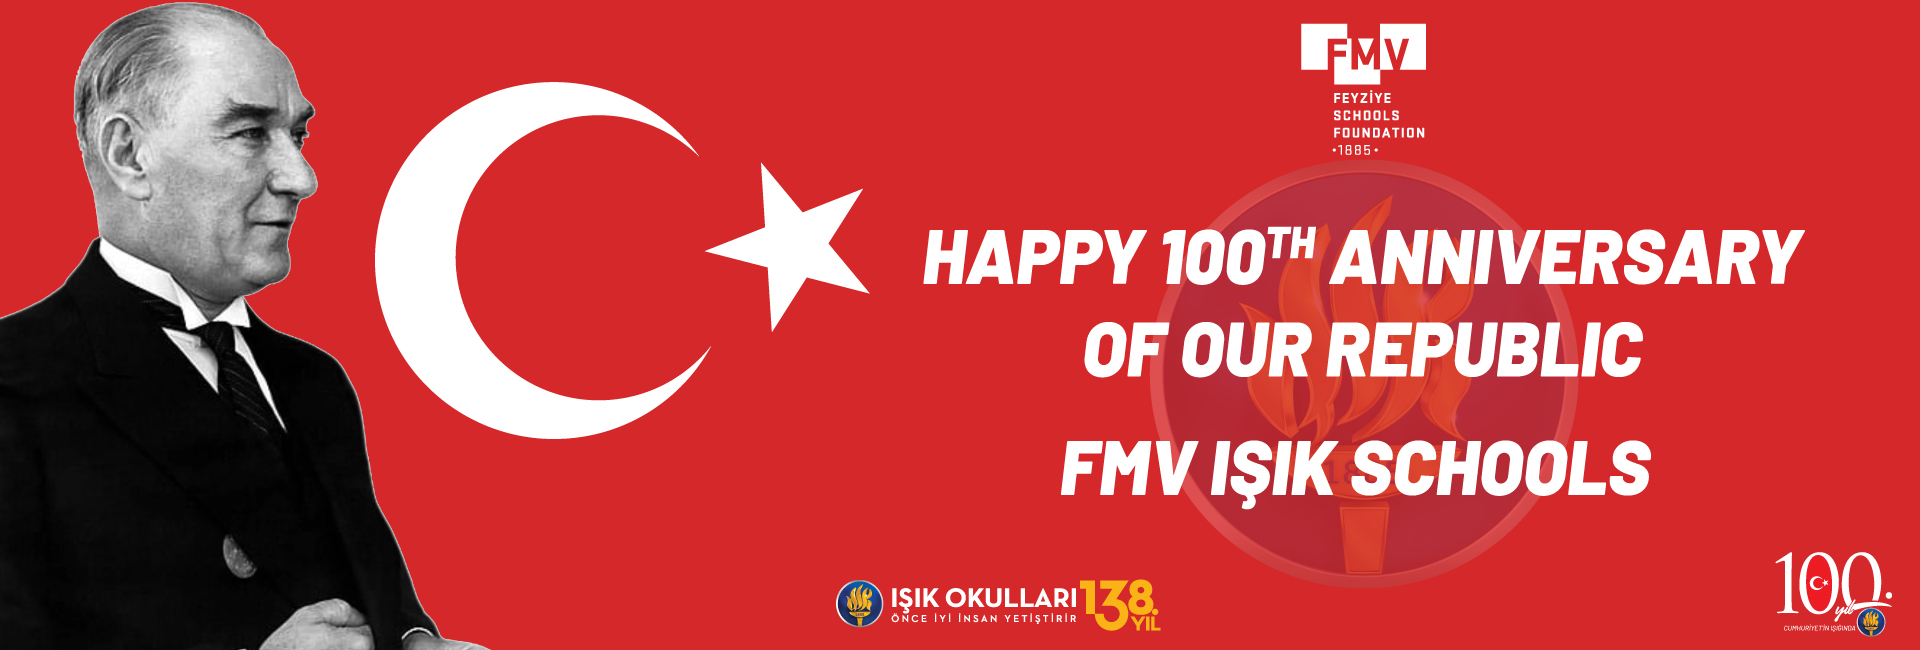 Happy 100th Anniversary of Our Republic 